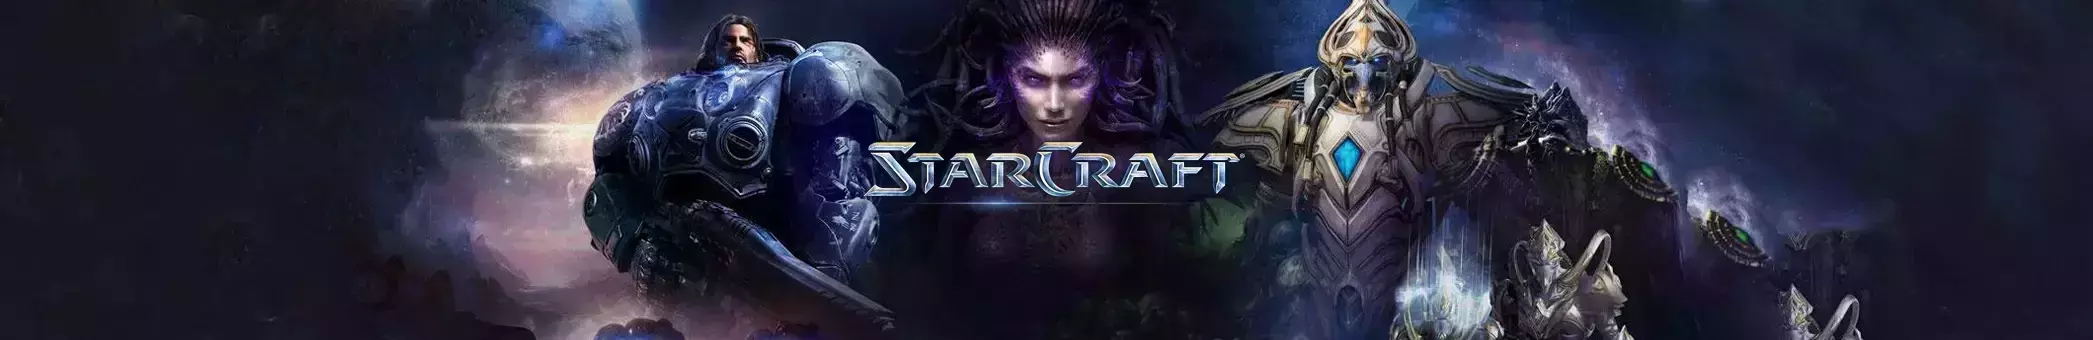 Starcraft Digital Edition